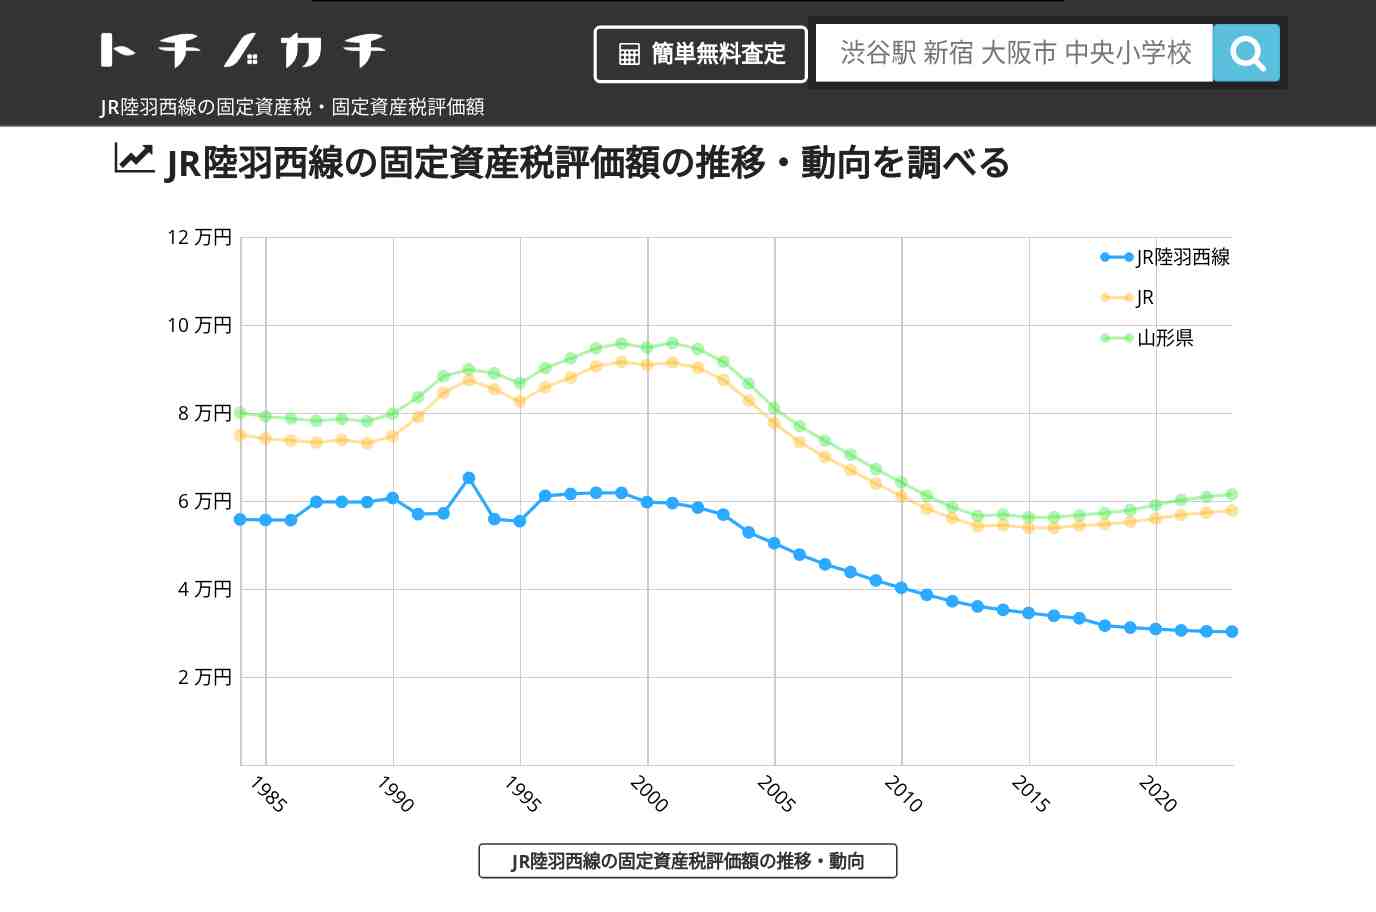 JR陸羽西線(JR)の固定資産税・固定資産税評価額 | トチノカチ